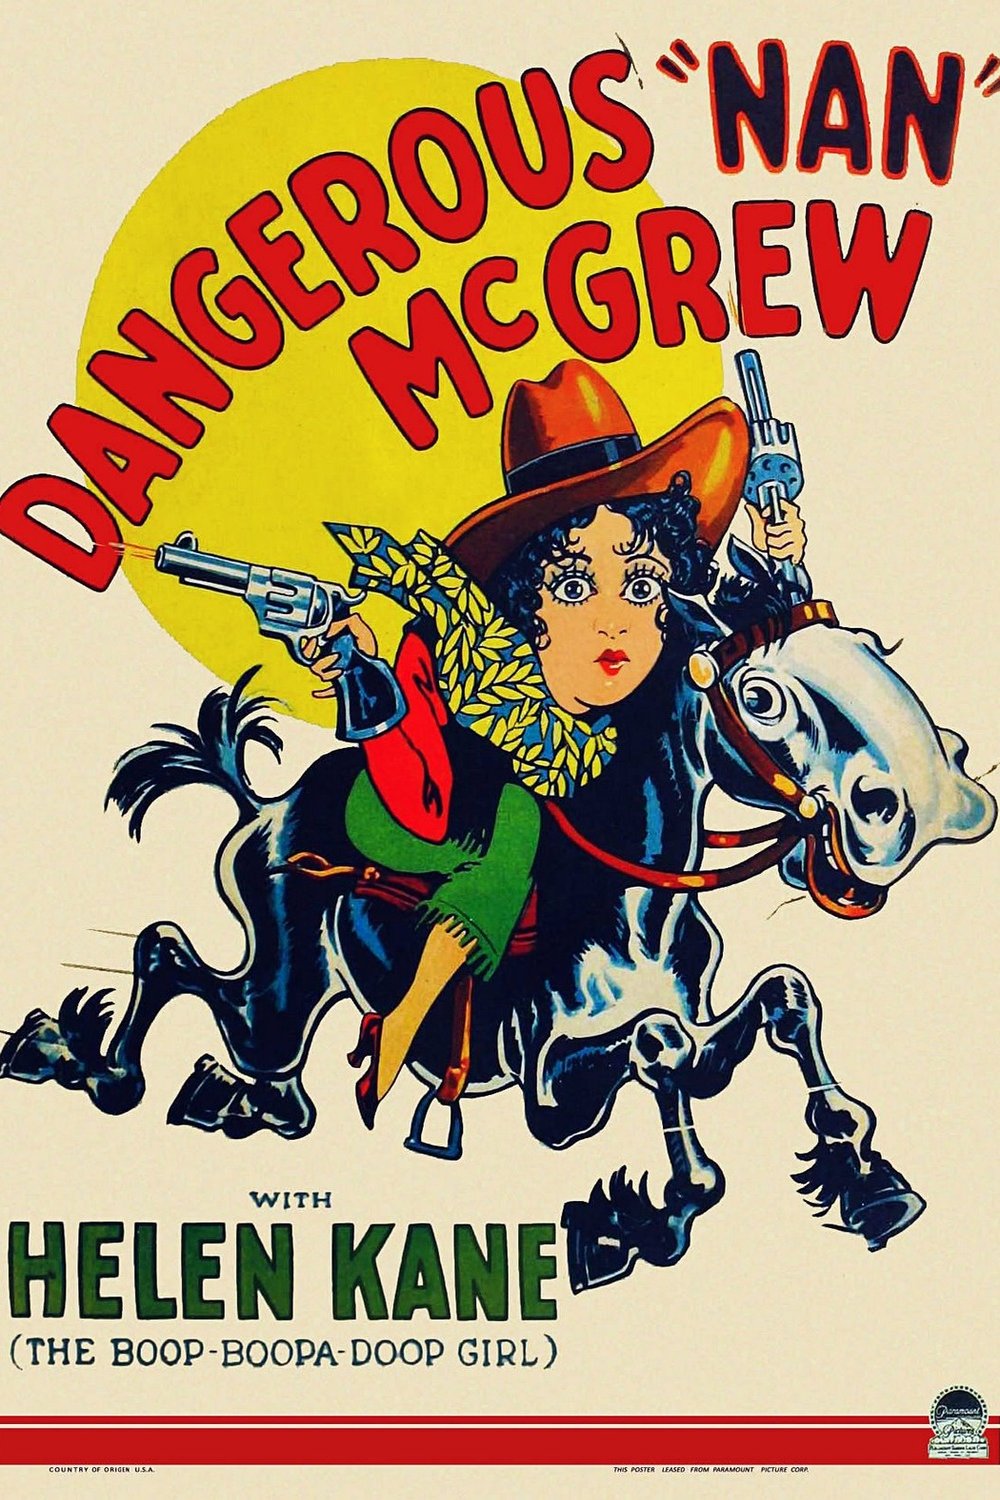 L'affiche du film Dangerous Nan McGrew